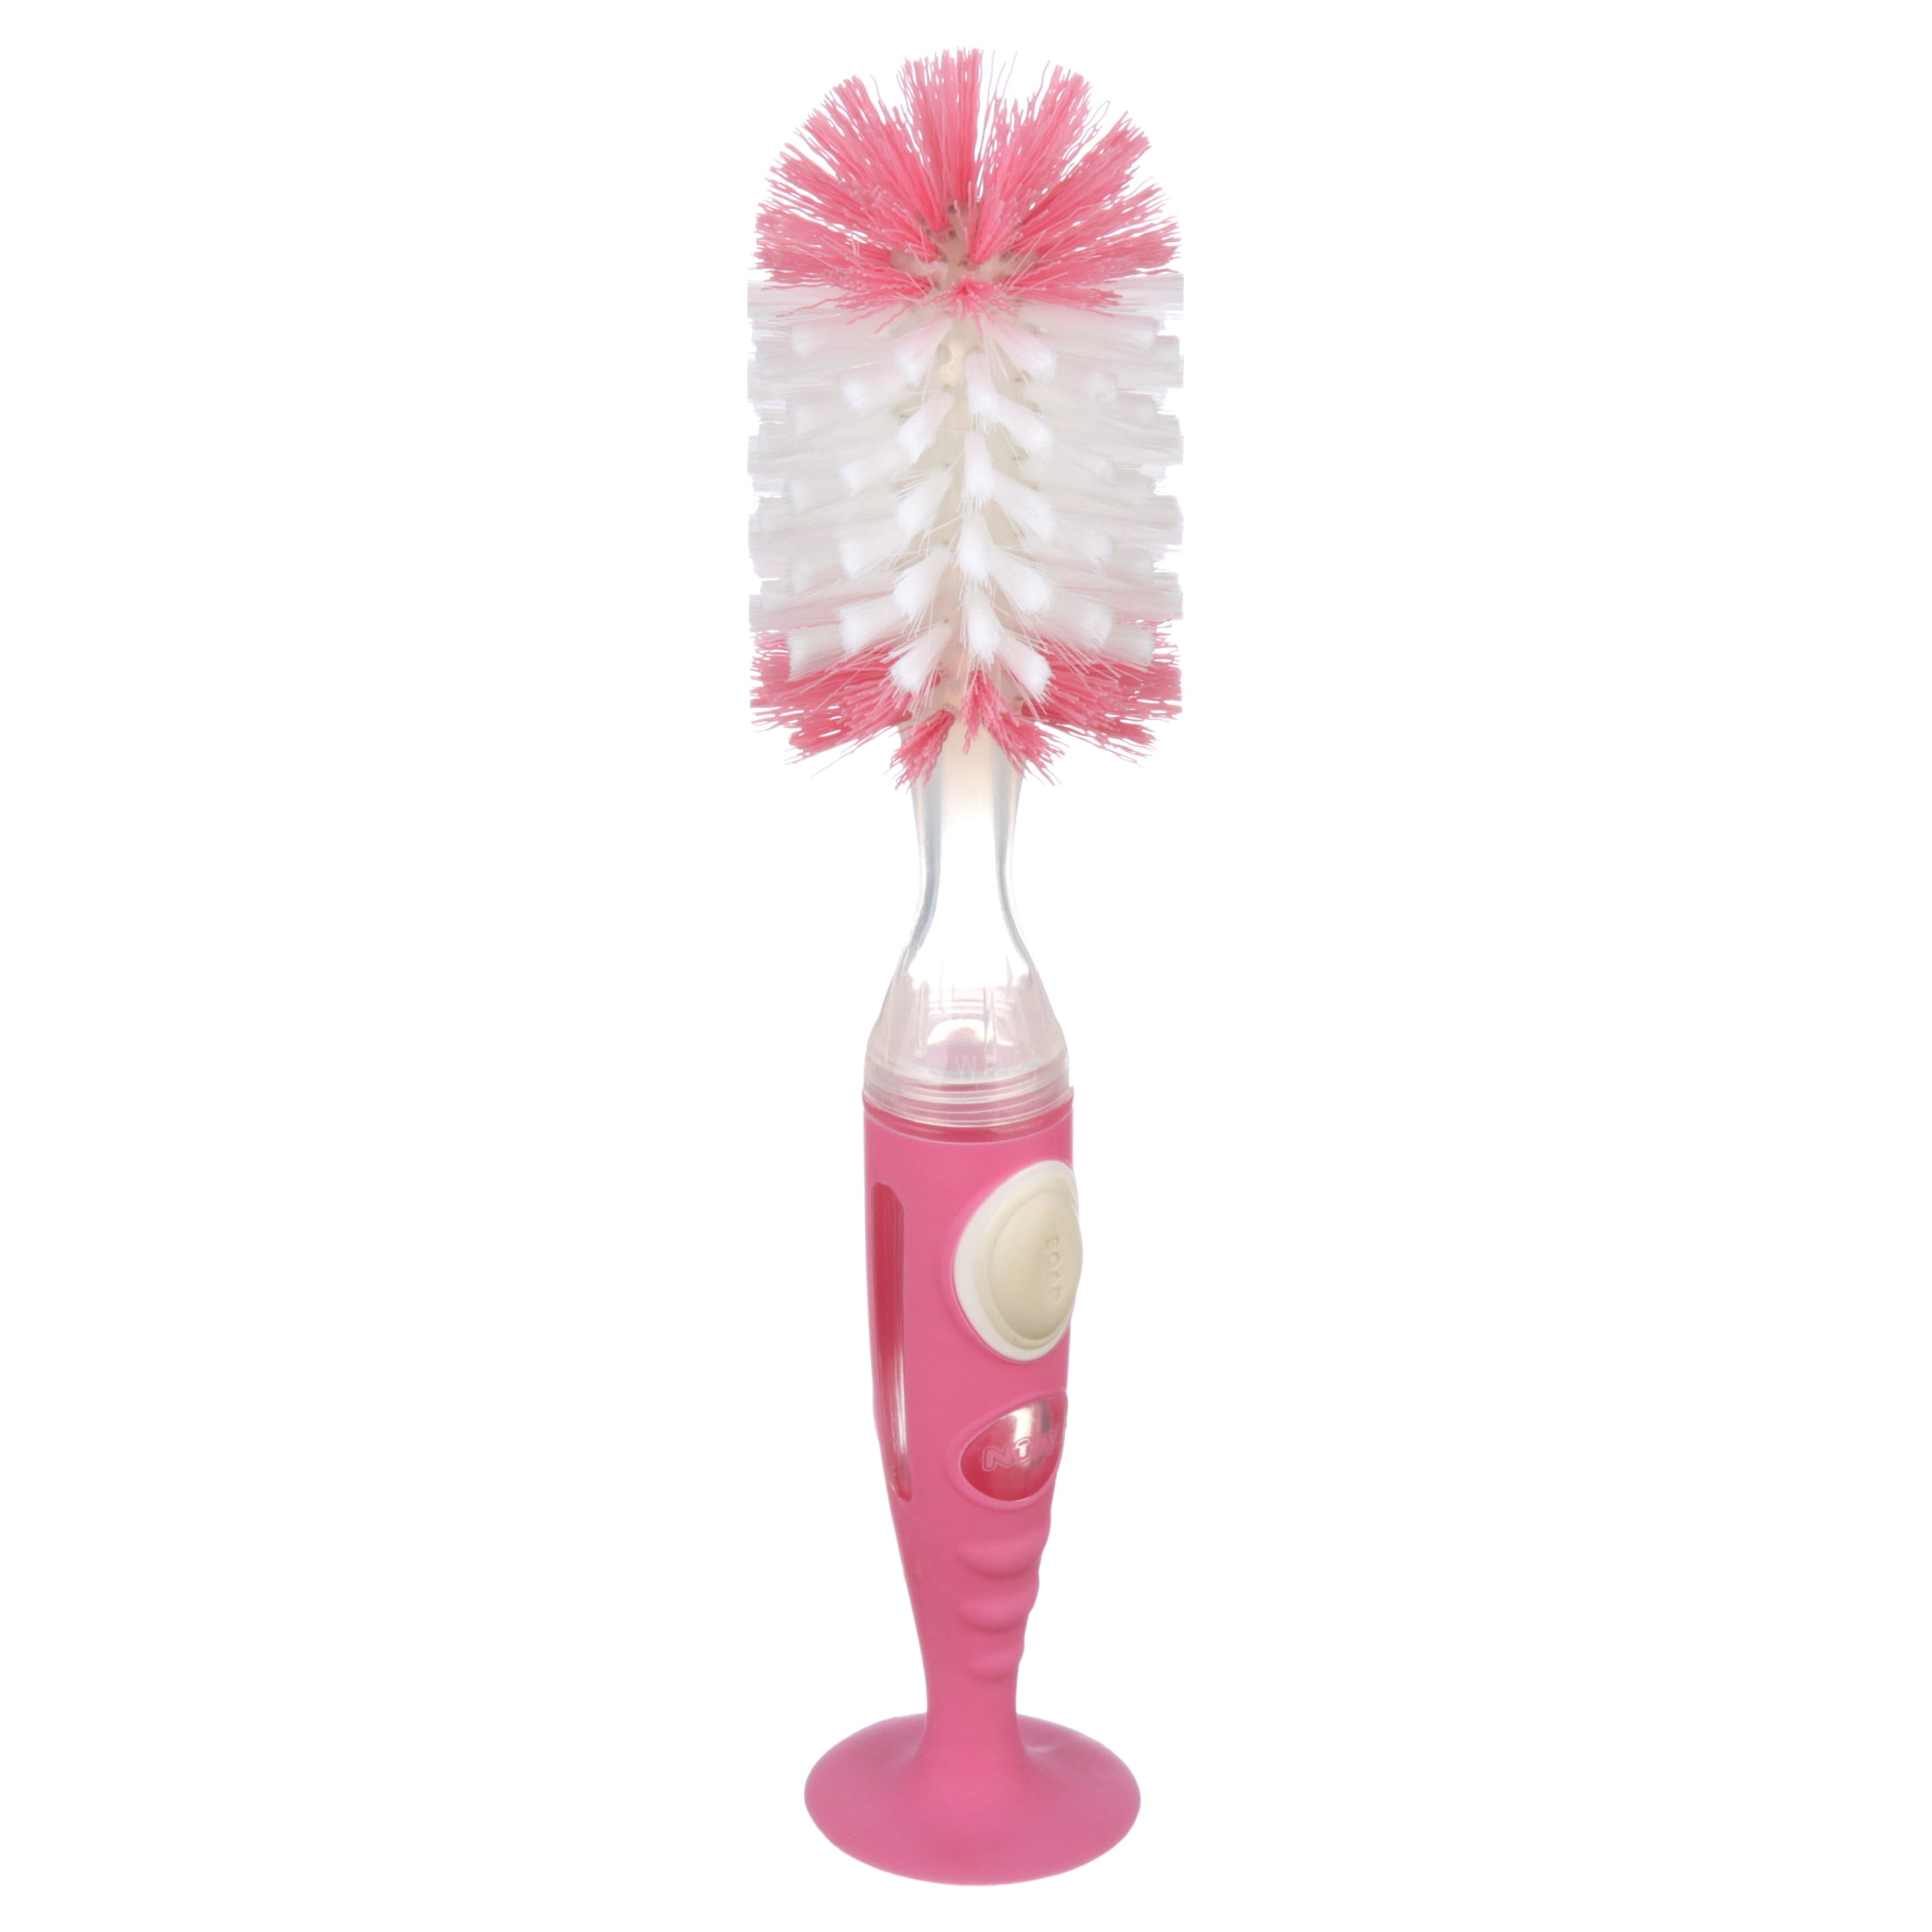 Sohindel Laundry Brush Shoe Brush Shoe Cleaning Brush Scrub Brush for Stains,Household Cleaning Brushes Bathroom - Pink Shoe Brush + Pink Clothes Brush, Men's